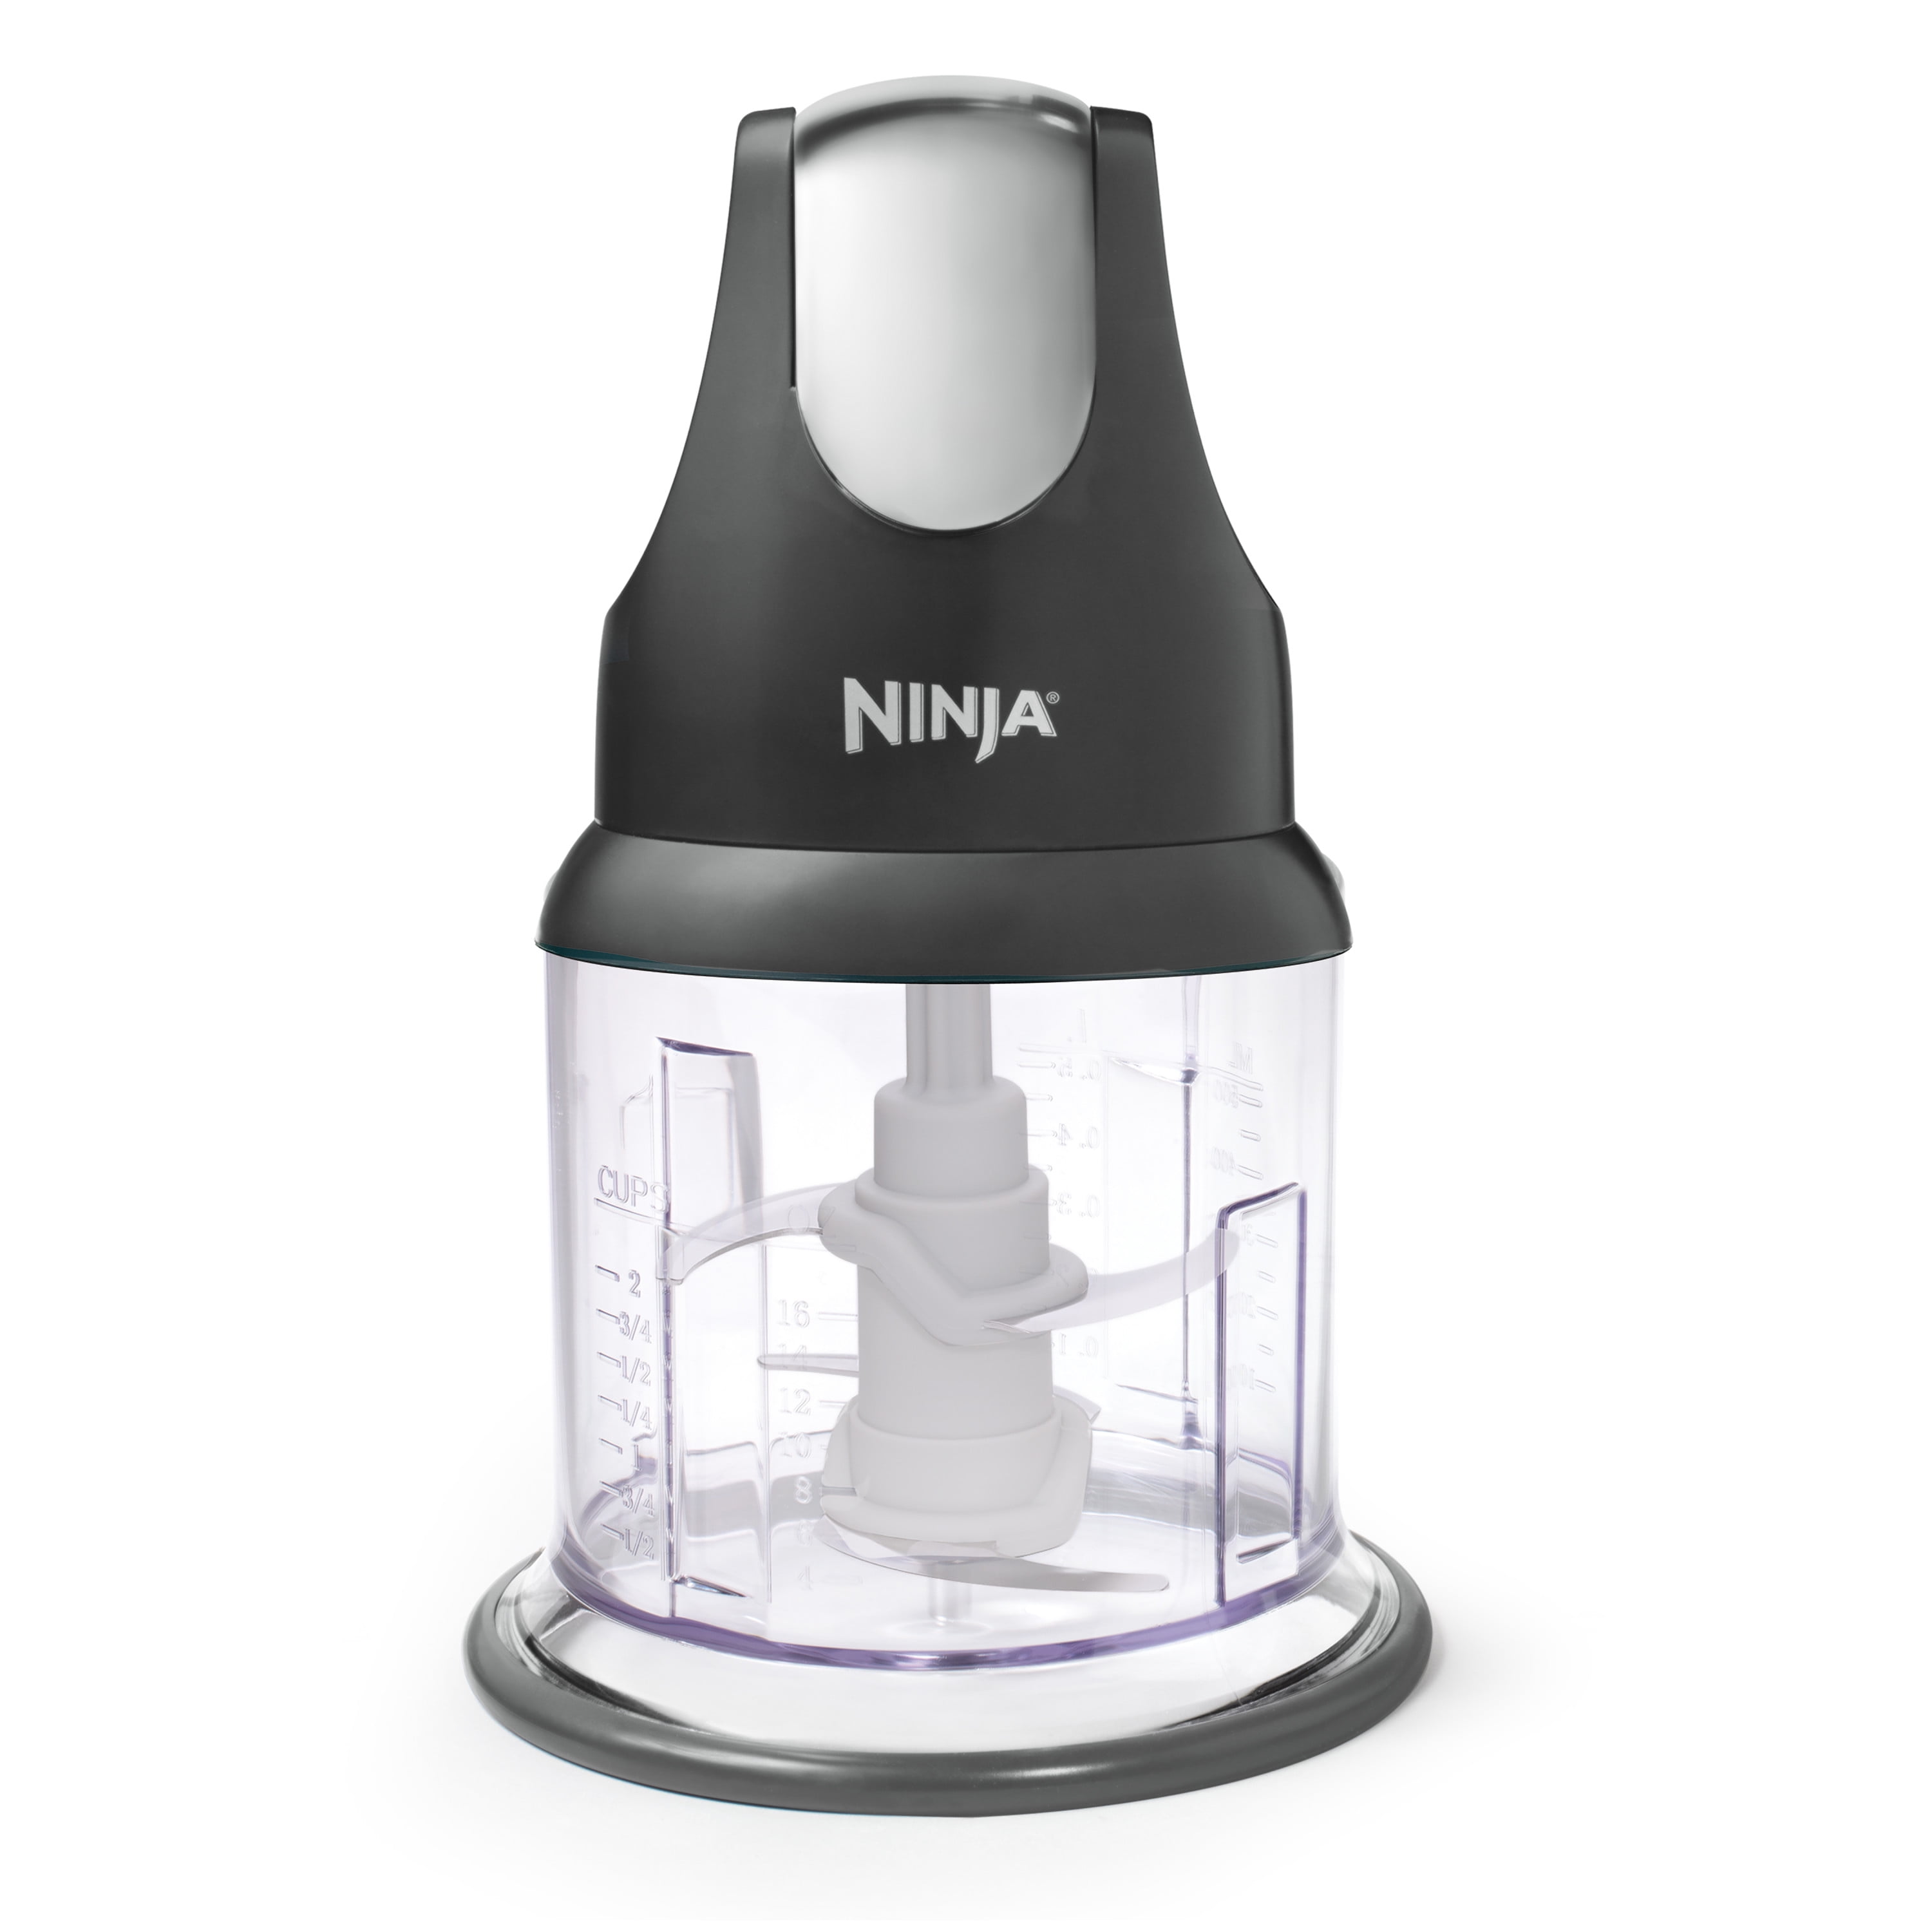 Ninja Express Chop. Space saving & functional food processor